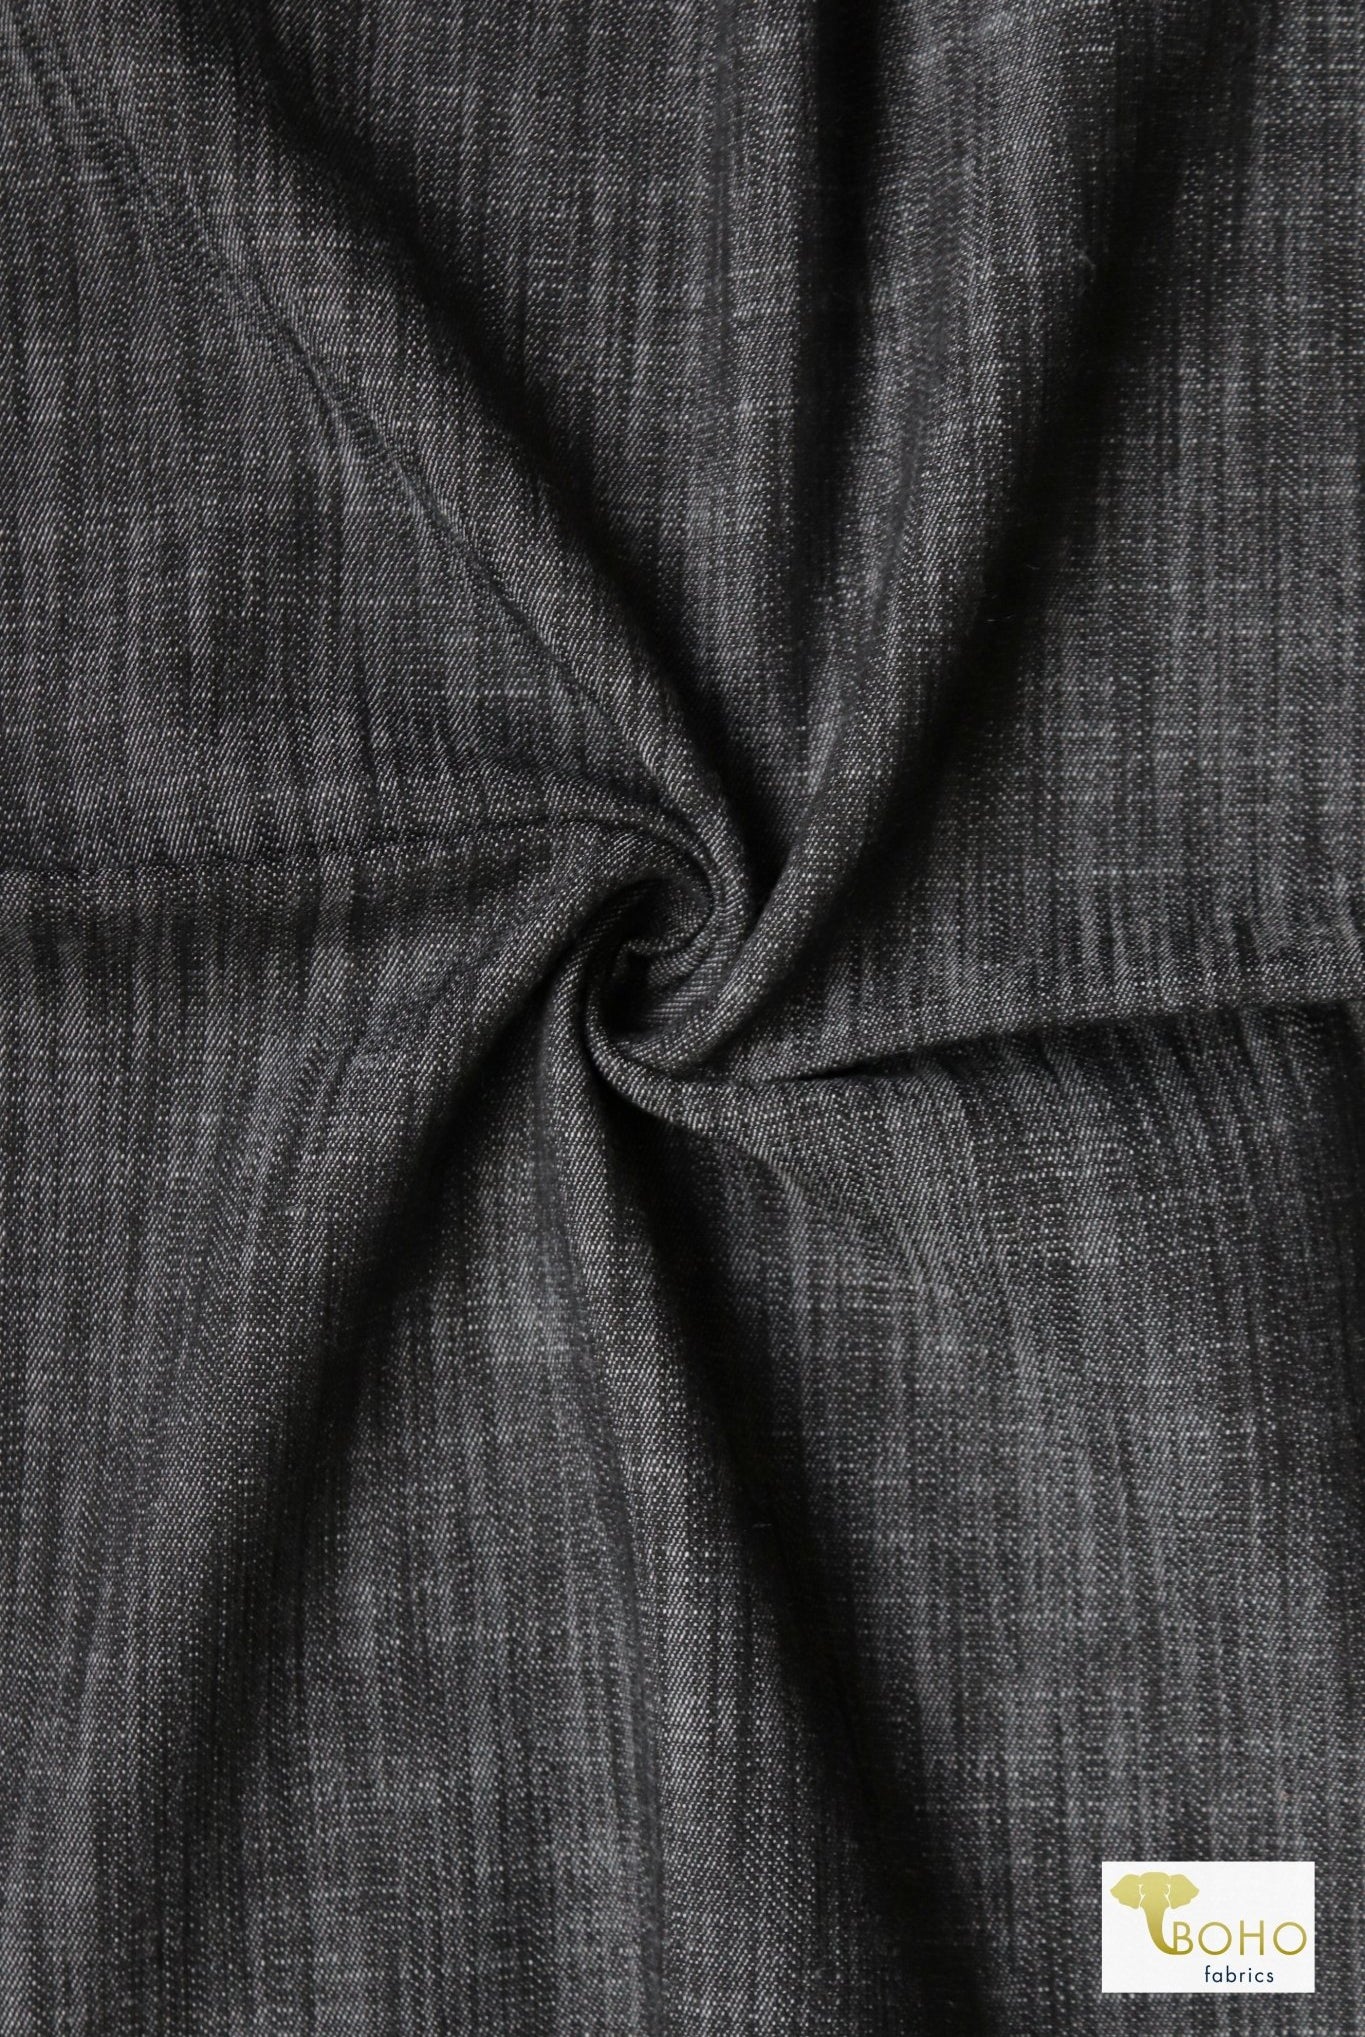 Coal Black Denim, Woven Twill Fabric - Boho Fabrics